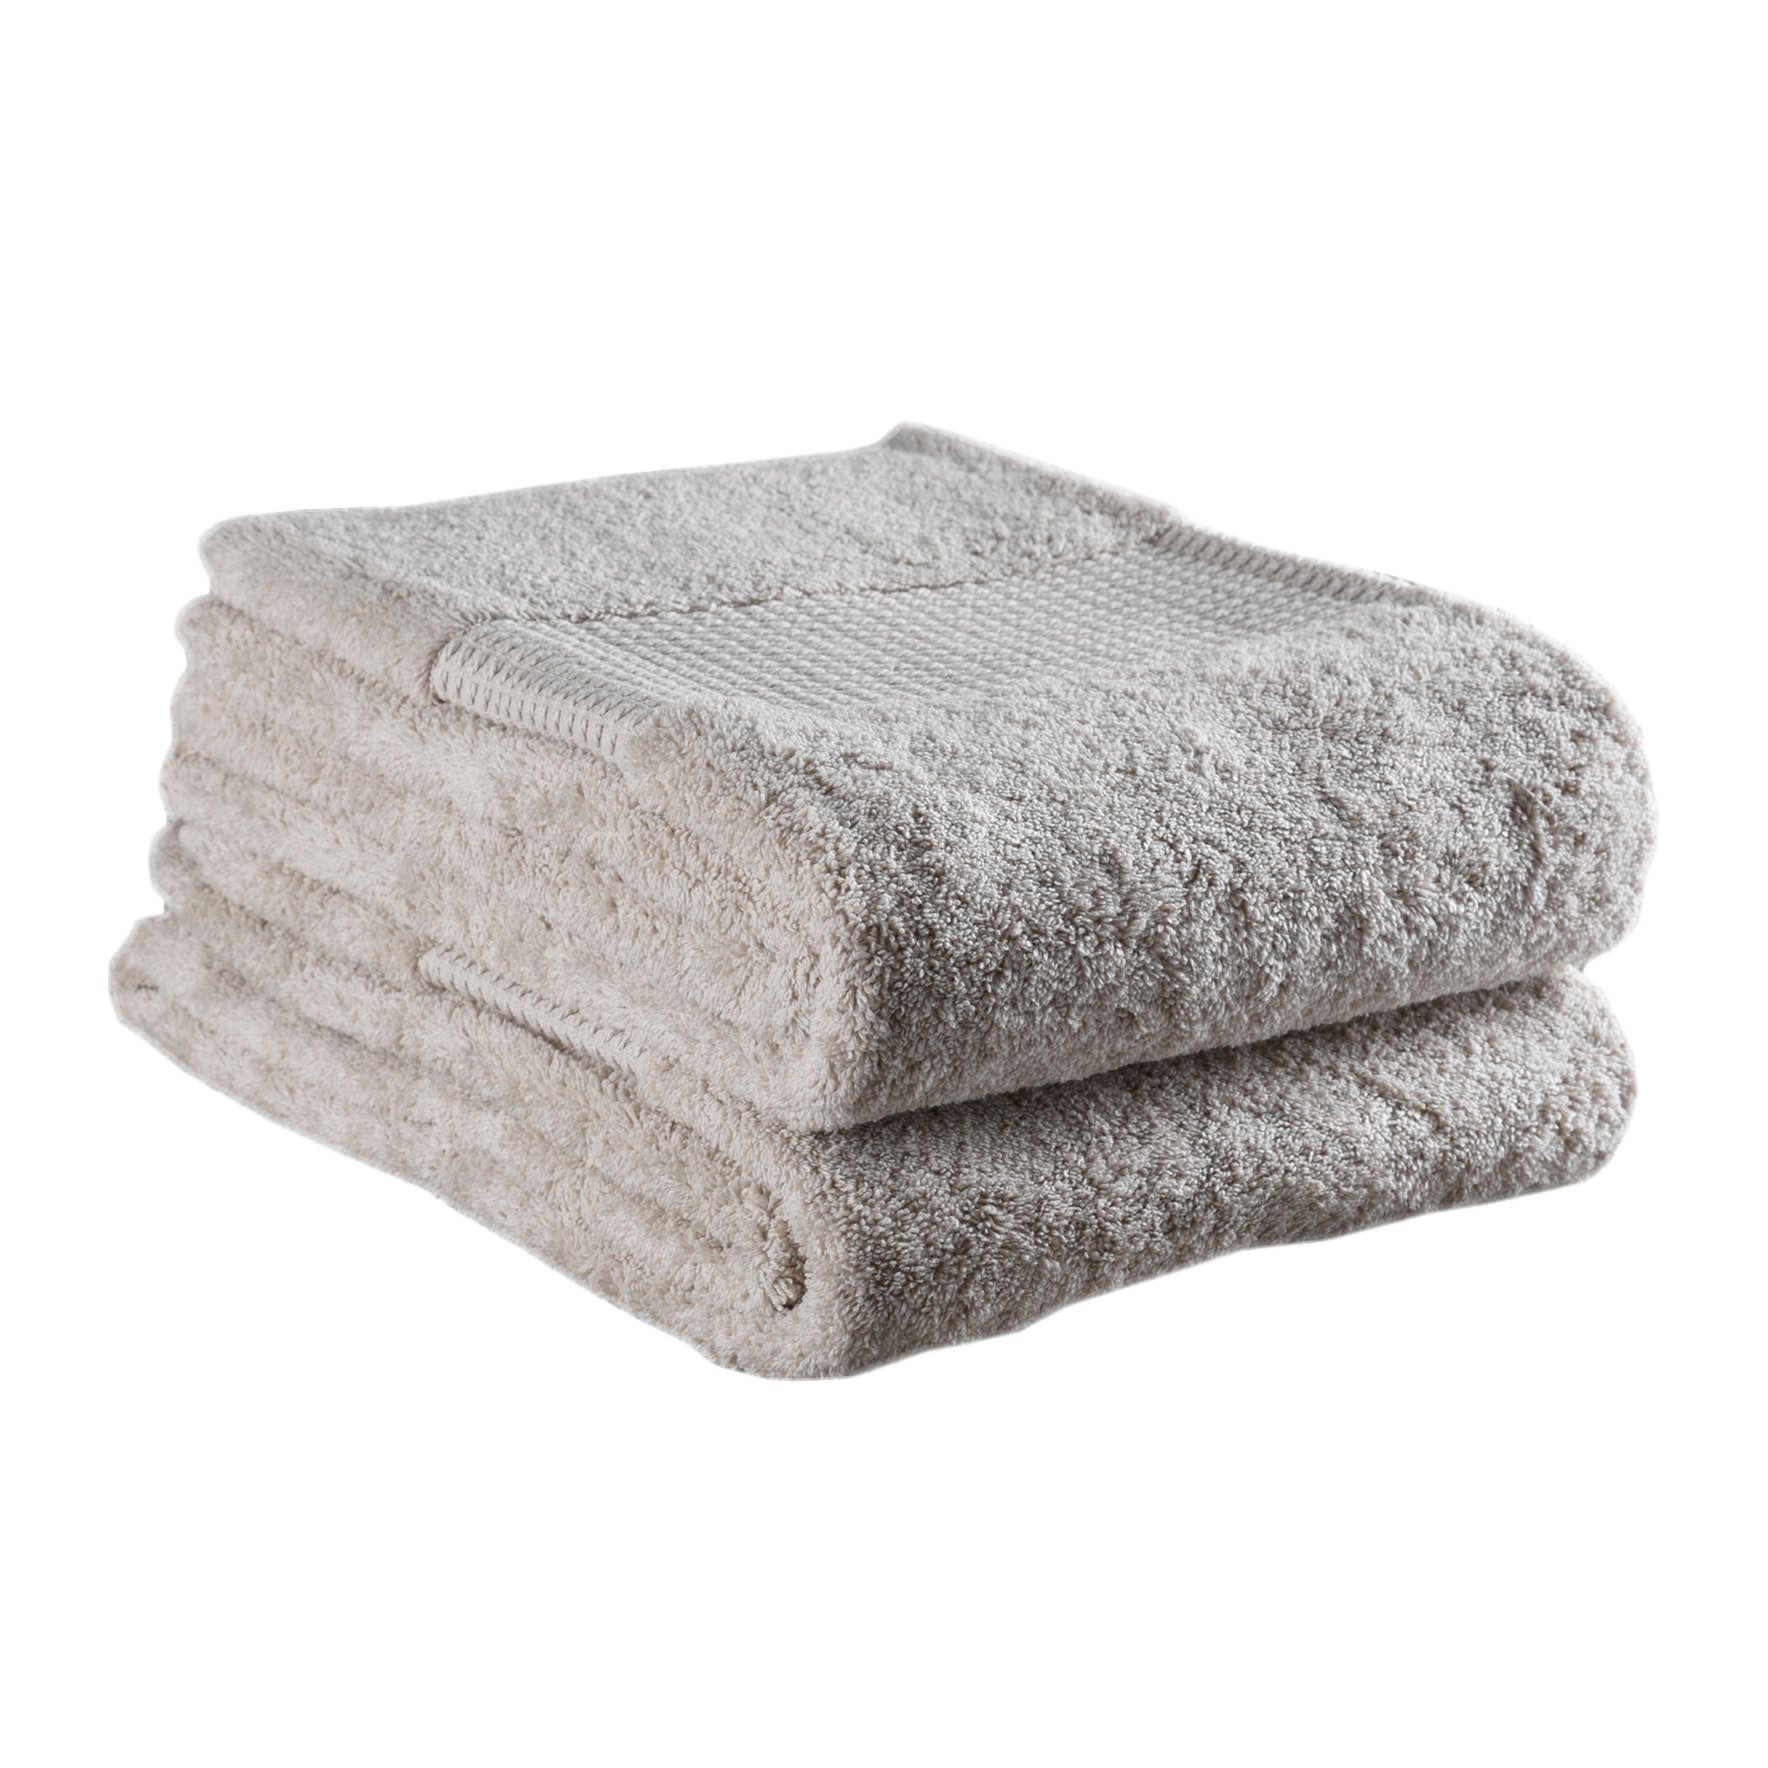 Delilah Home DHT-100101 Natural Organic Cotton Towel